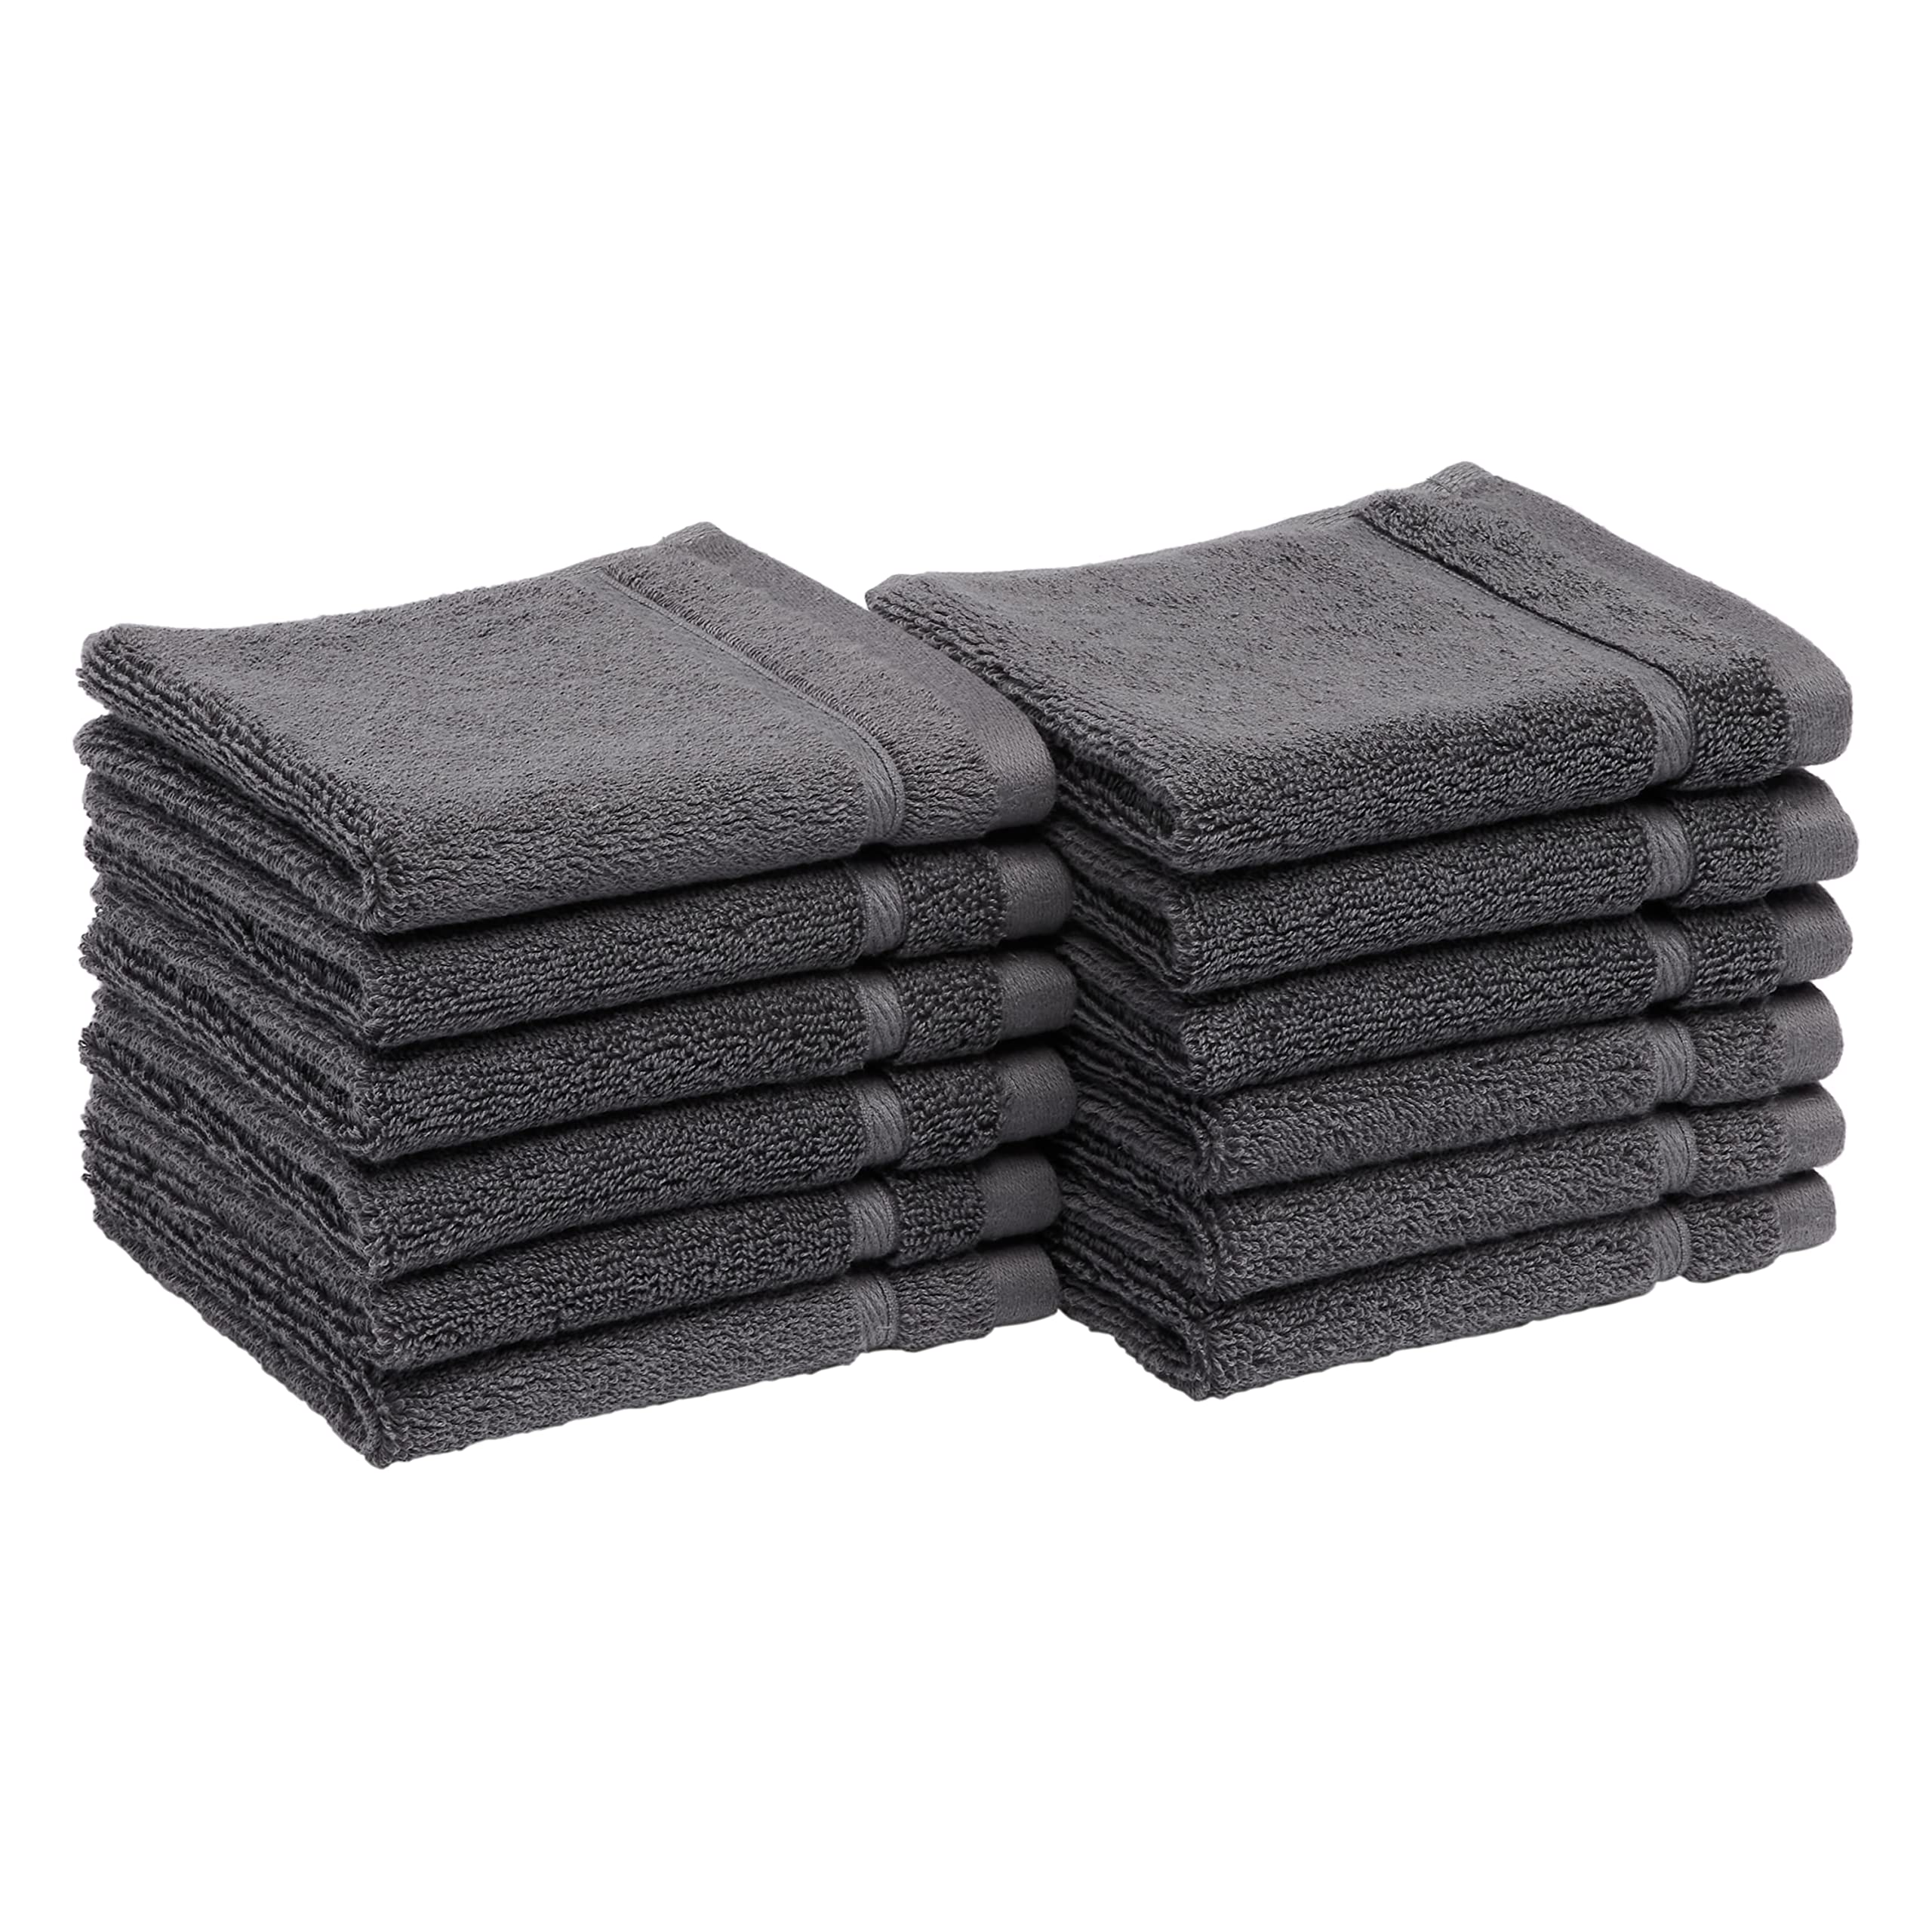 Basics Cotton Washcloths, Made with 30% Recycled Cotton Content -  12-Pack, Dark Gray Dark Grey Washcloths